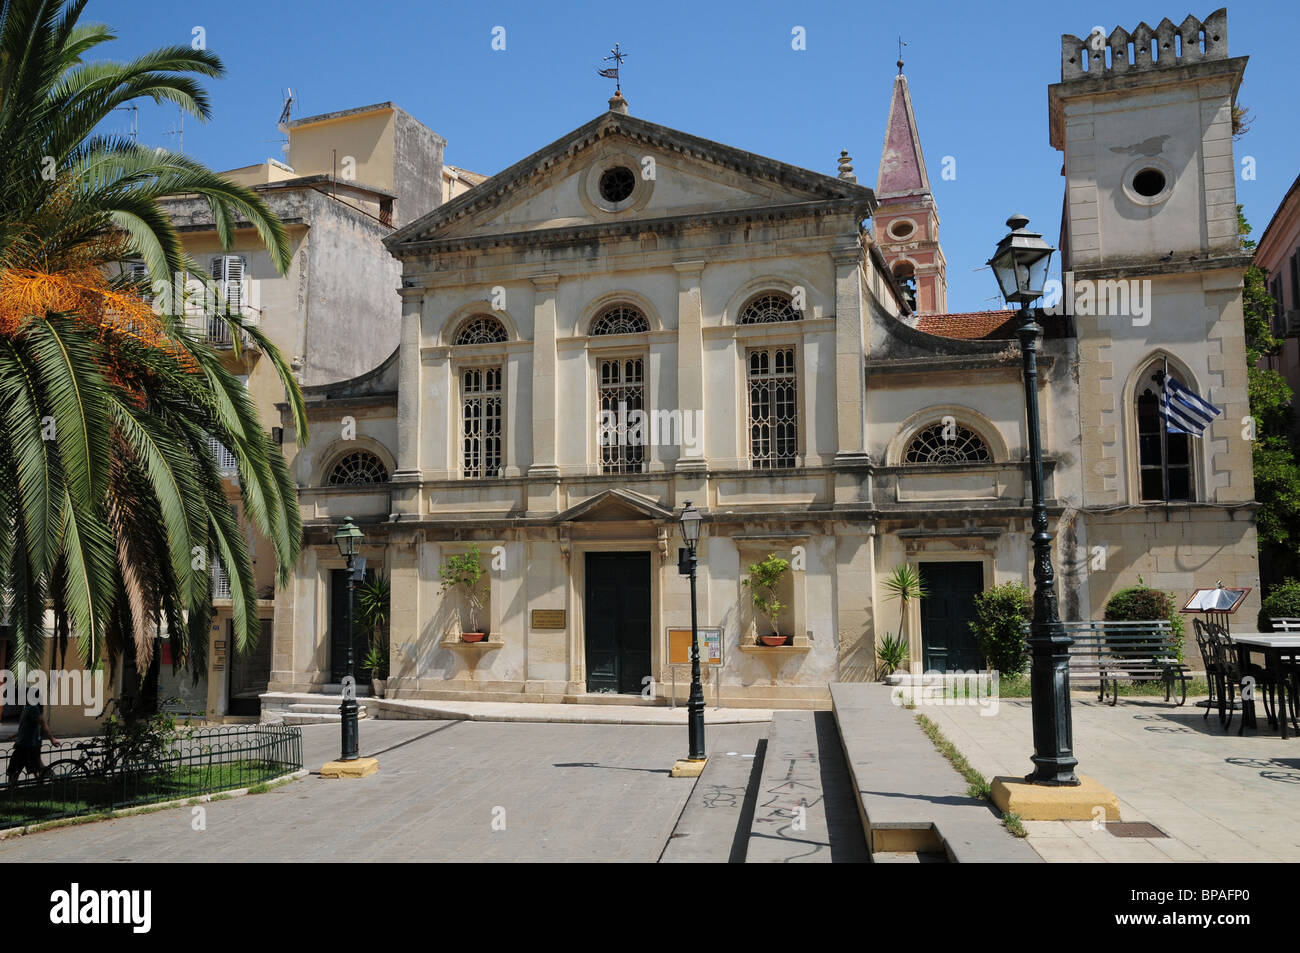 Cathedral of St James, Corfu, Mediterranean, Europe Stock Photo